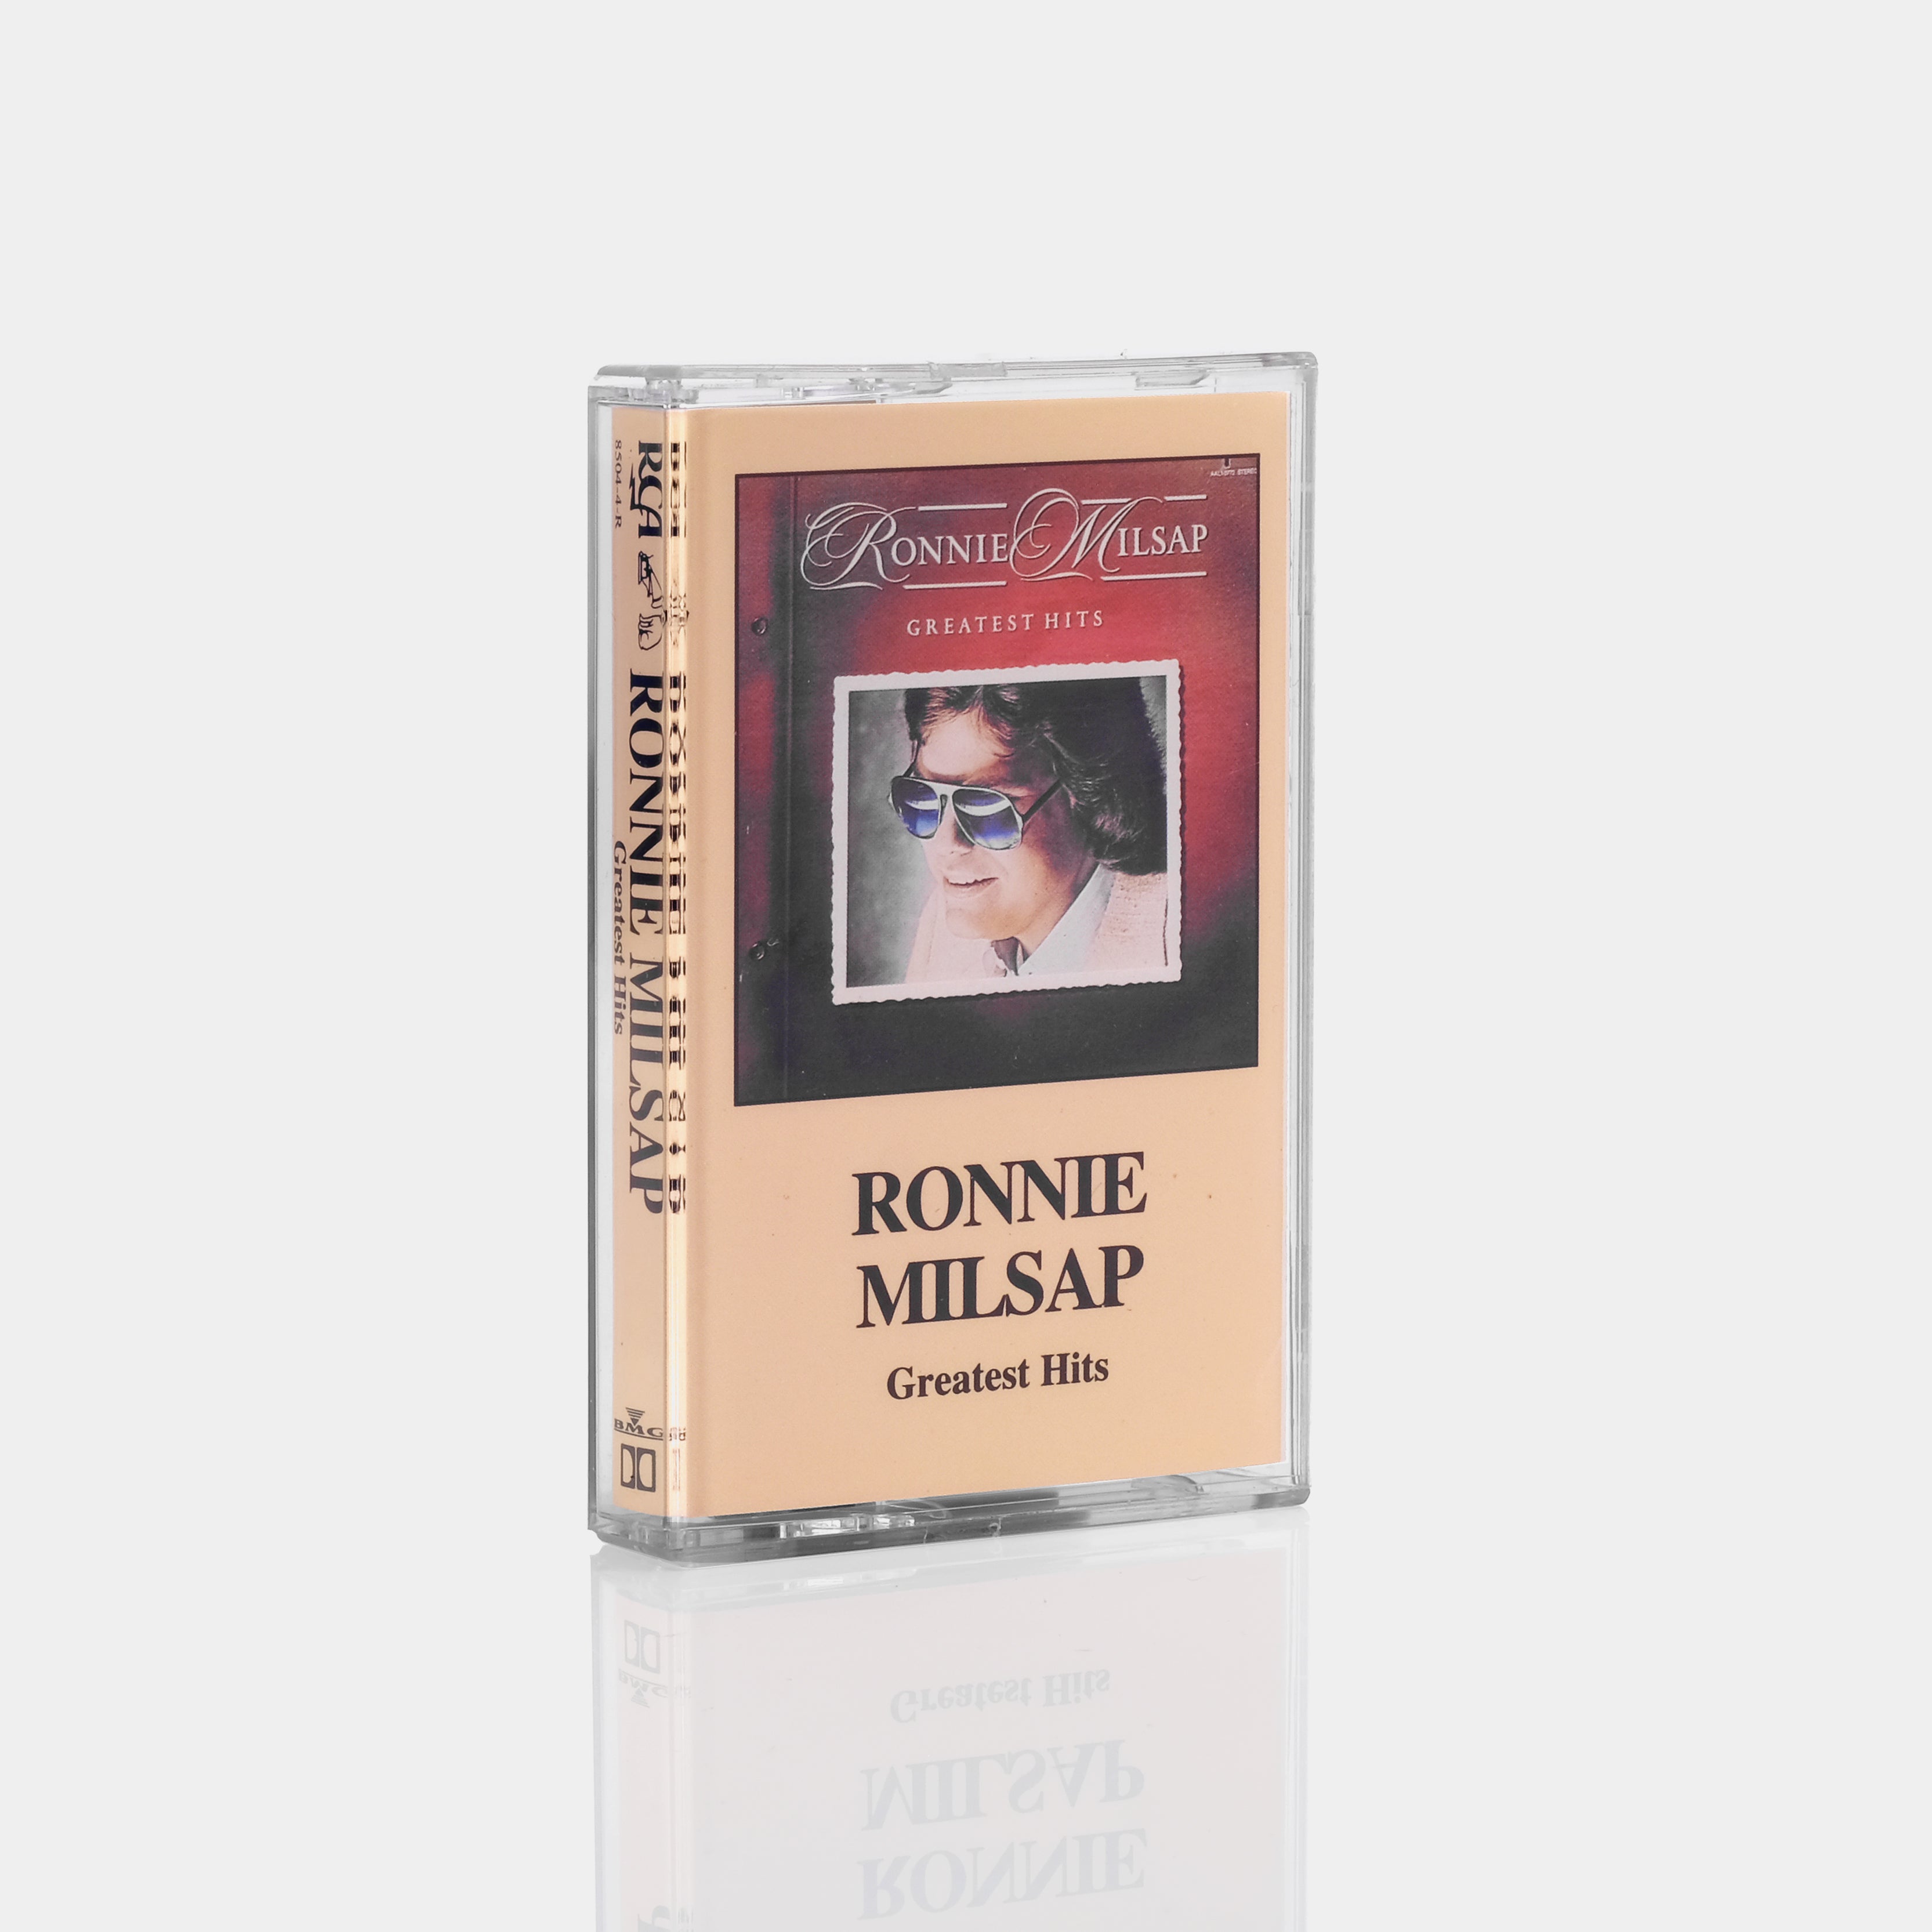 Ronnie Milsap - Greatest Hits Cassette Tape